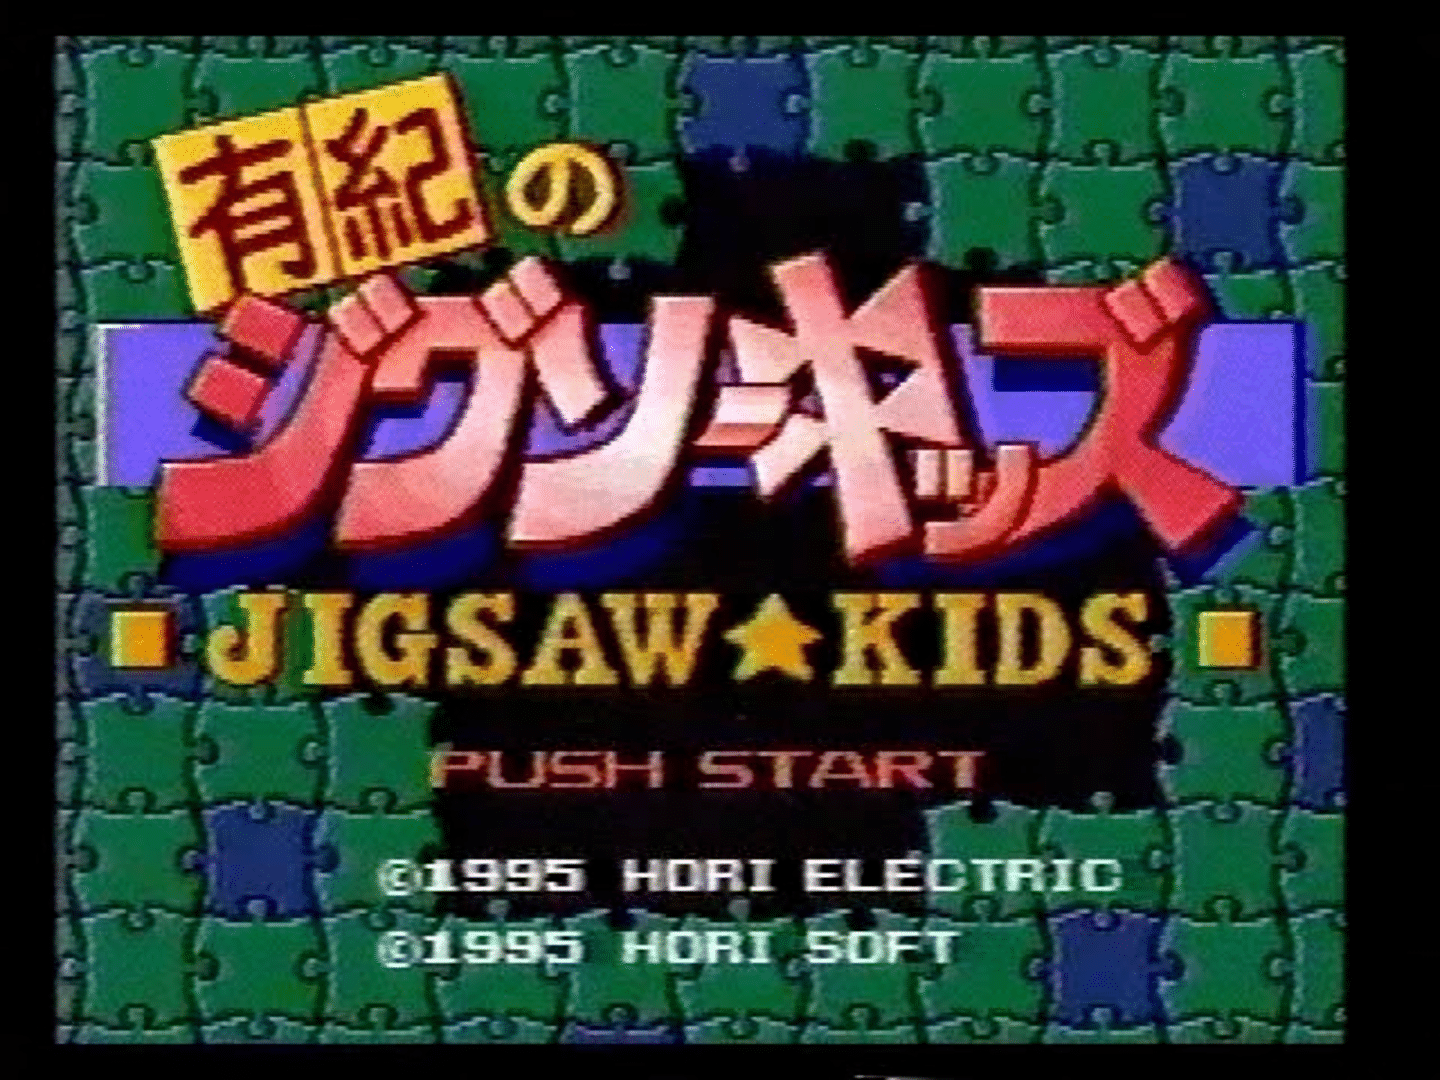 Yuki no Jigsaw Kids screenshot